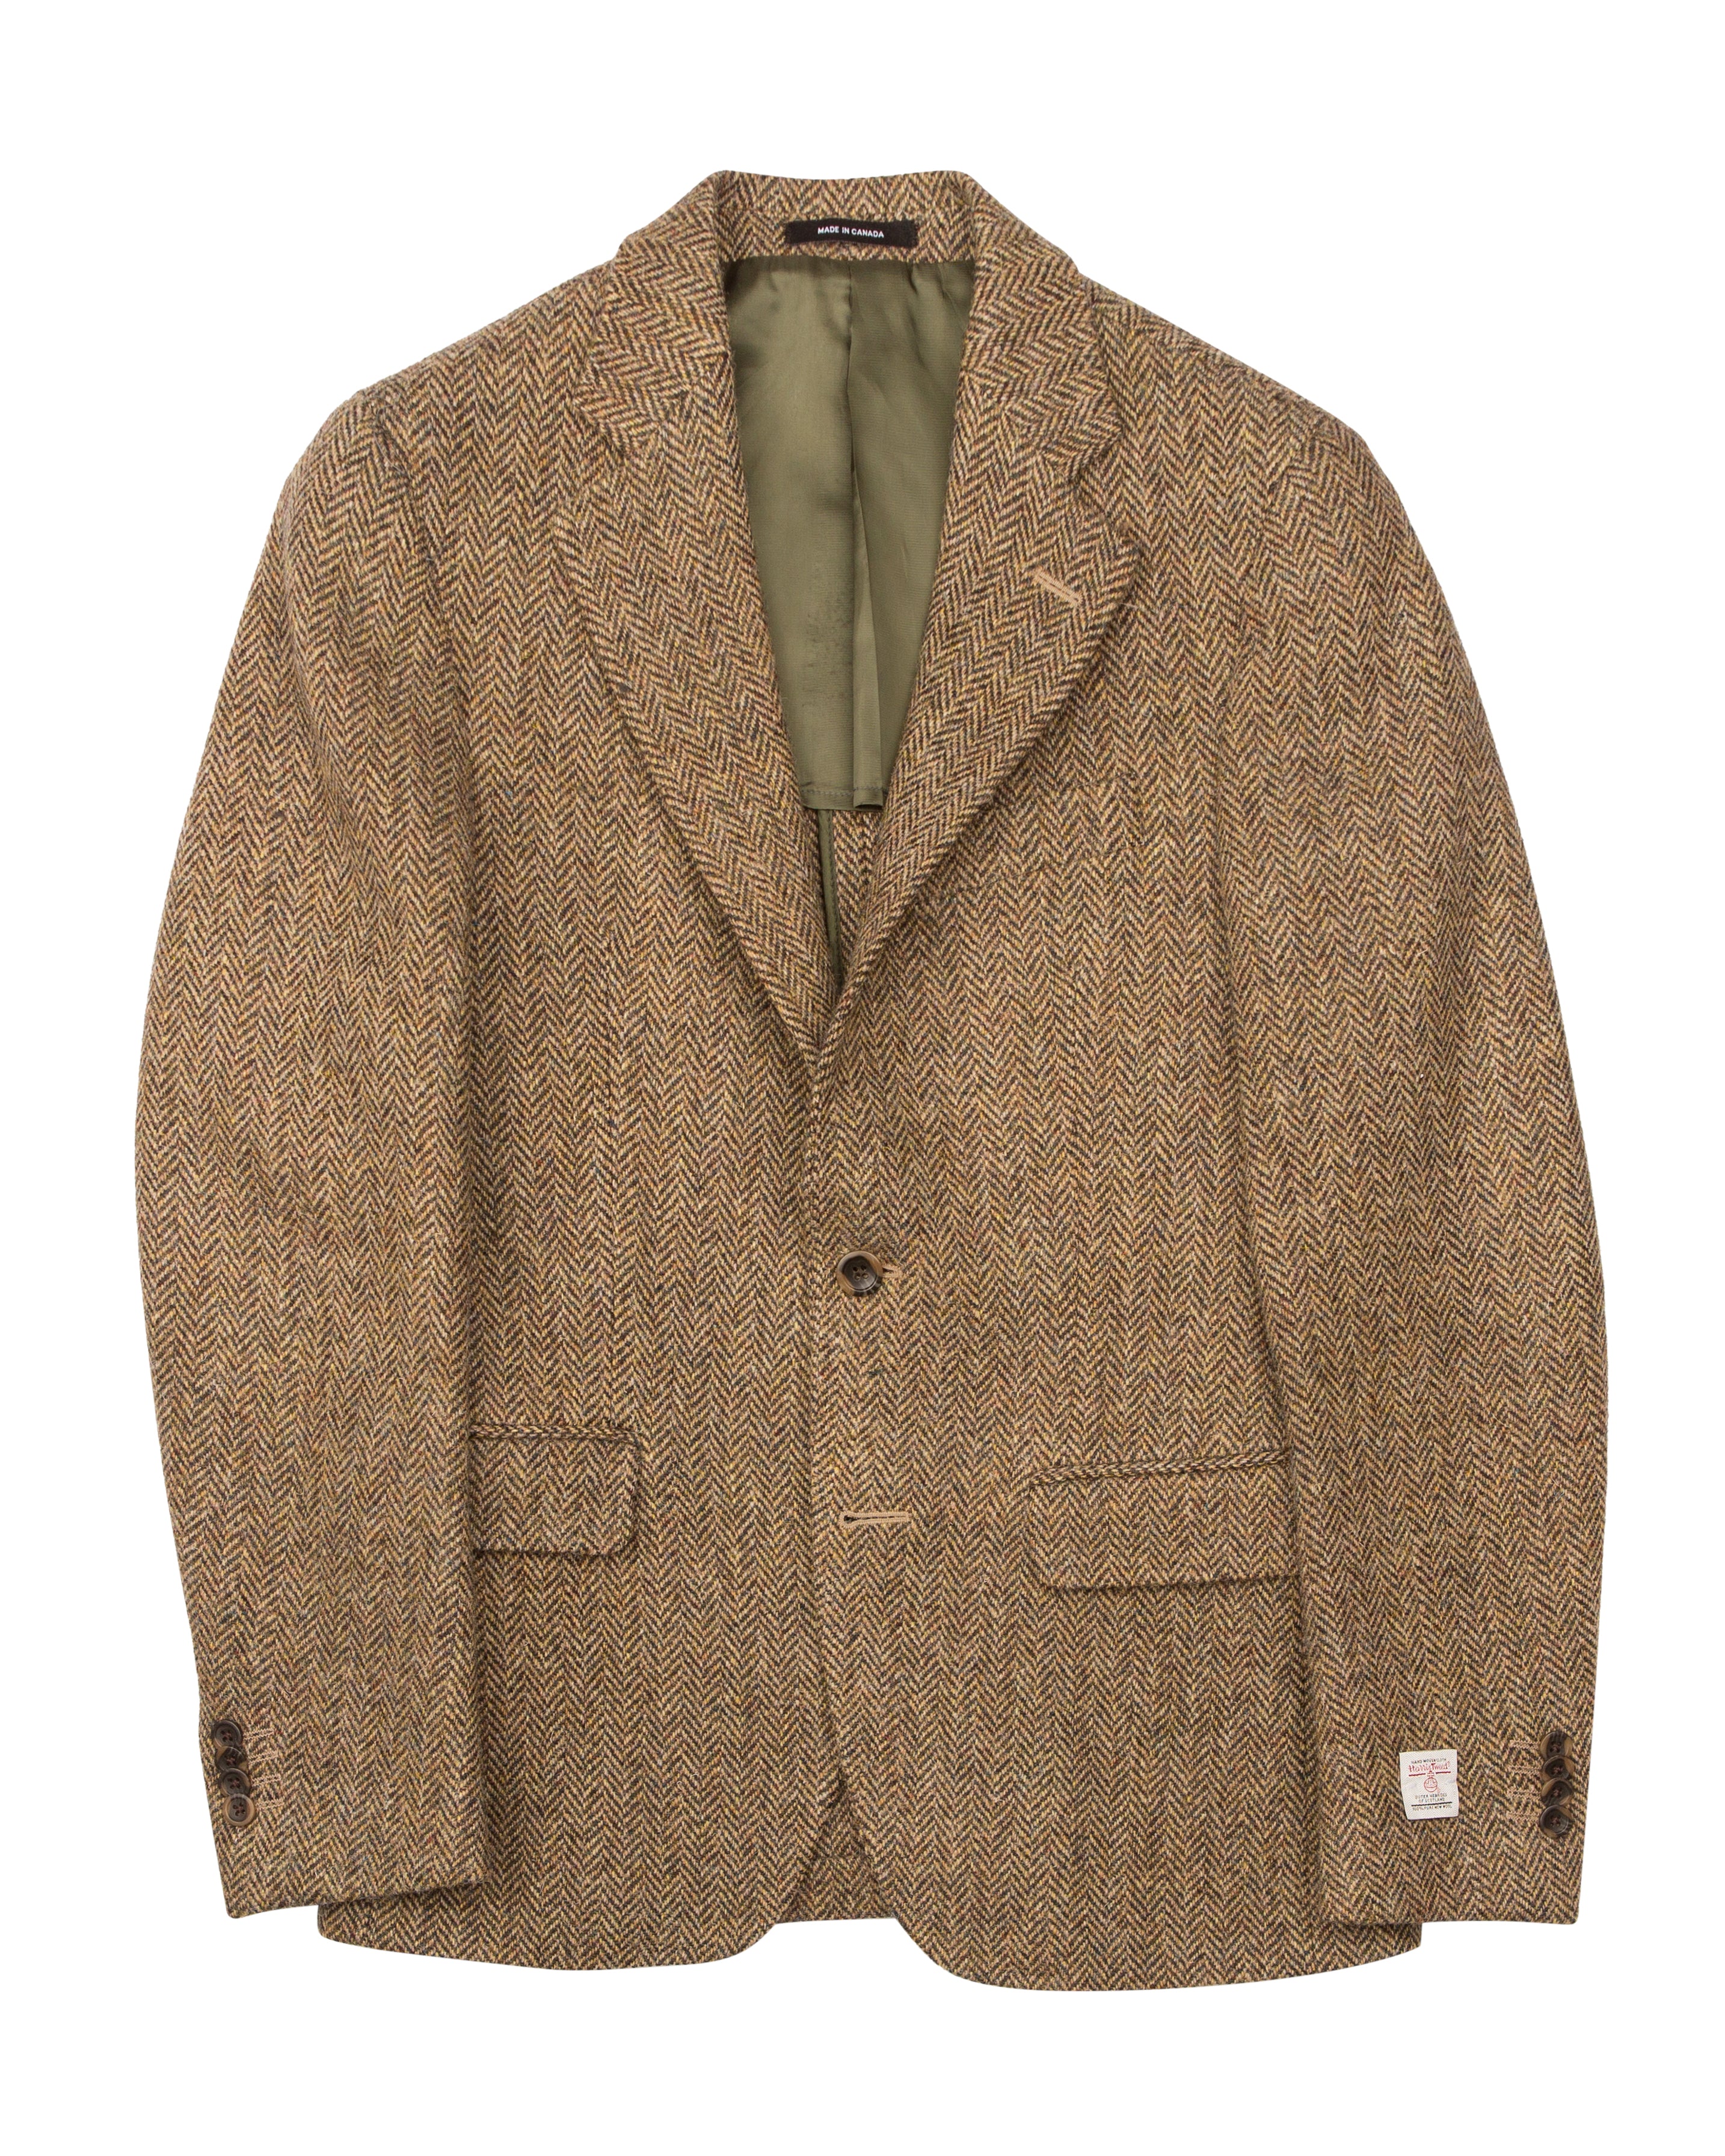 Harris Tweed Jacket  Third Son Tailor Shop